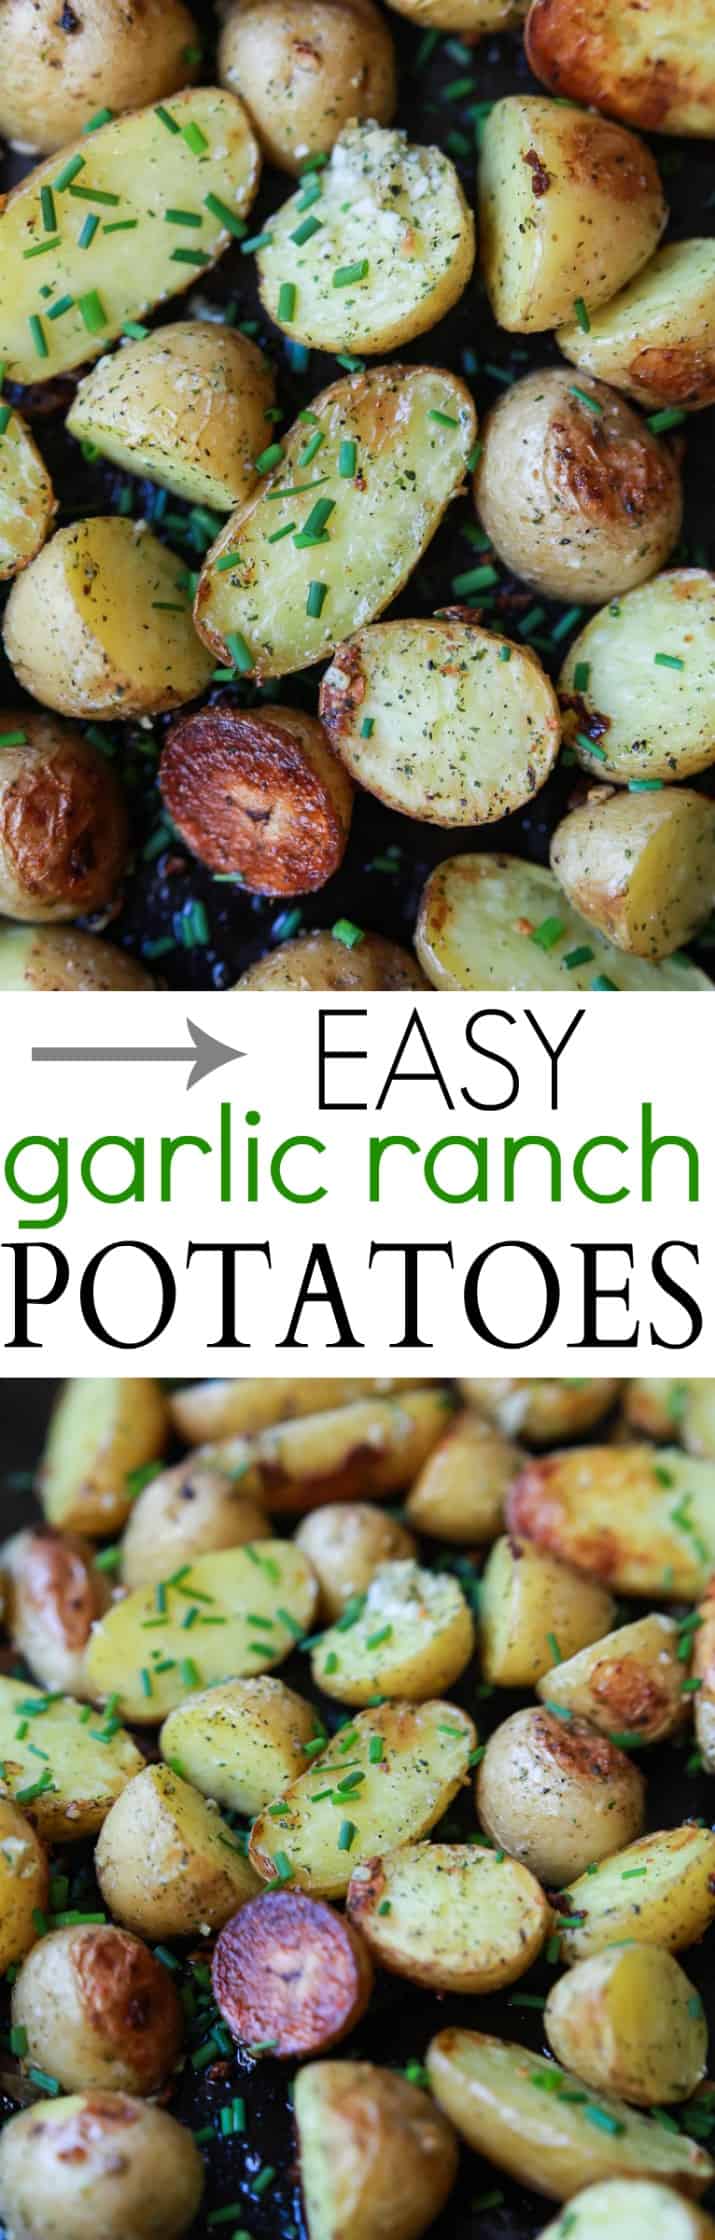 Easy Garlic Ranch Potatoes recipe collage